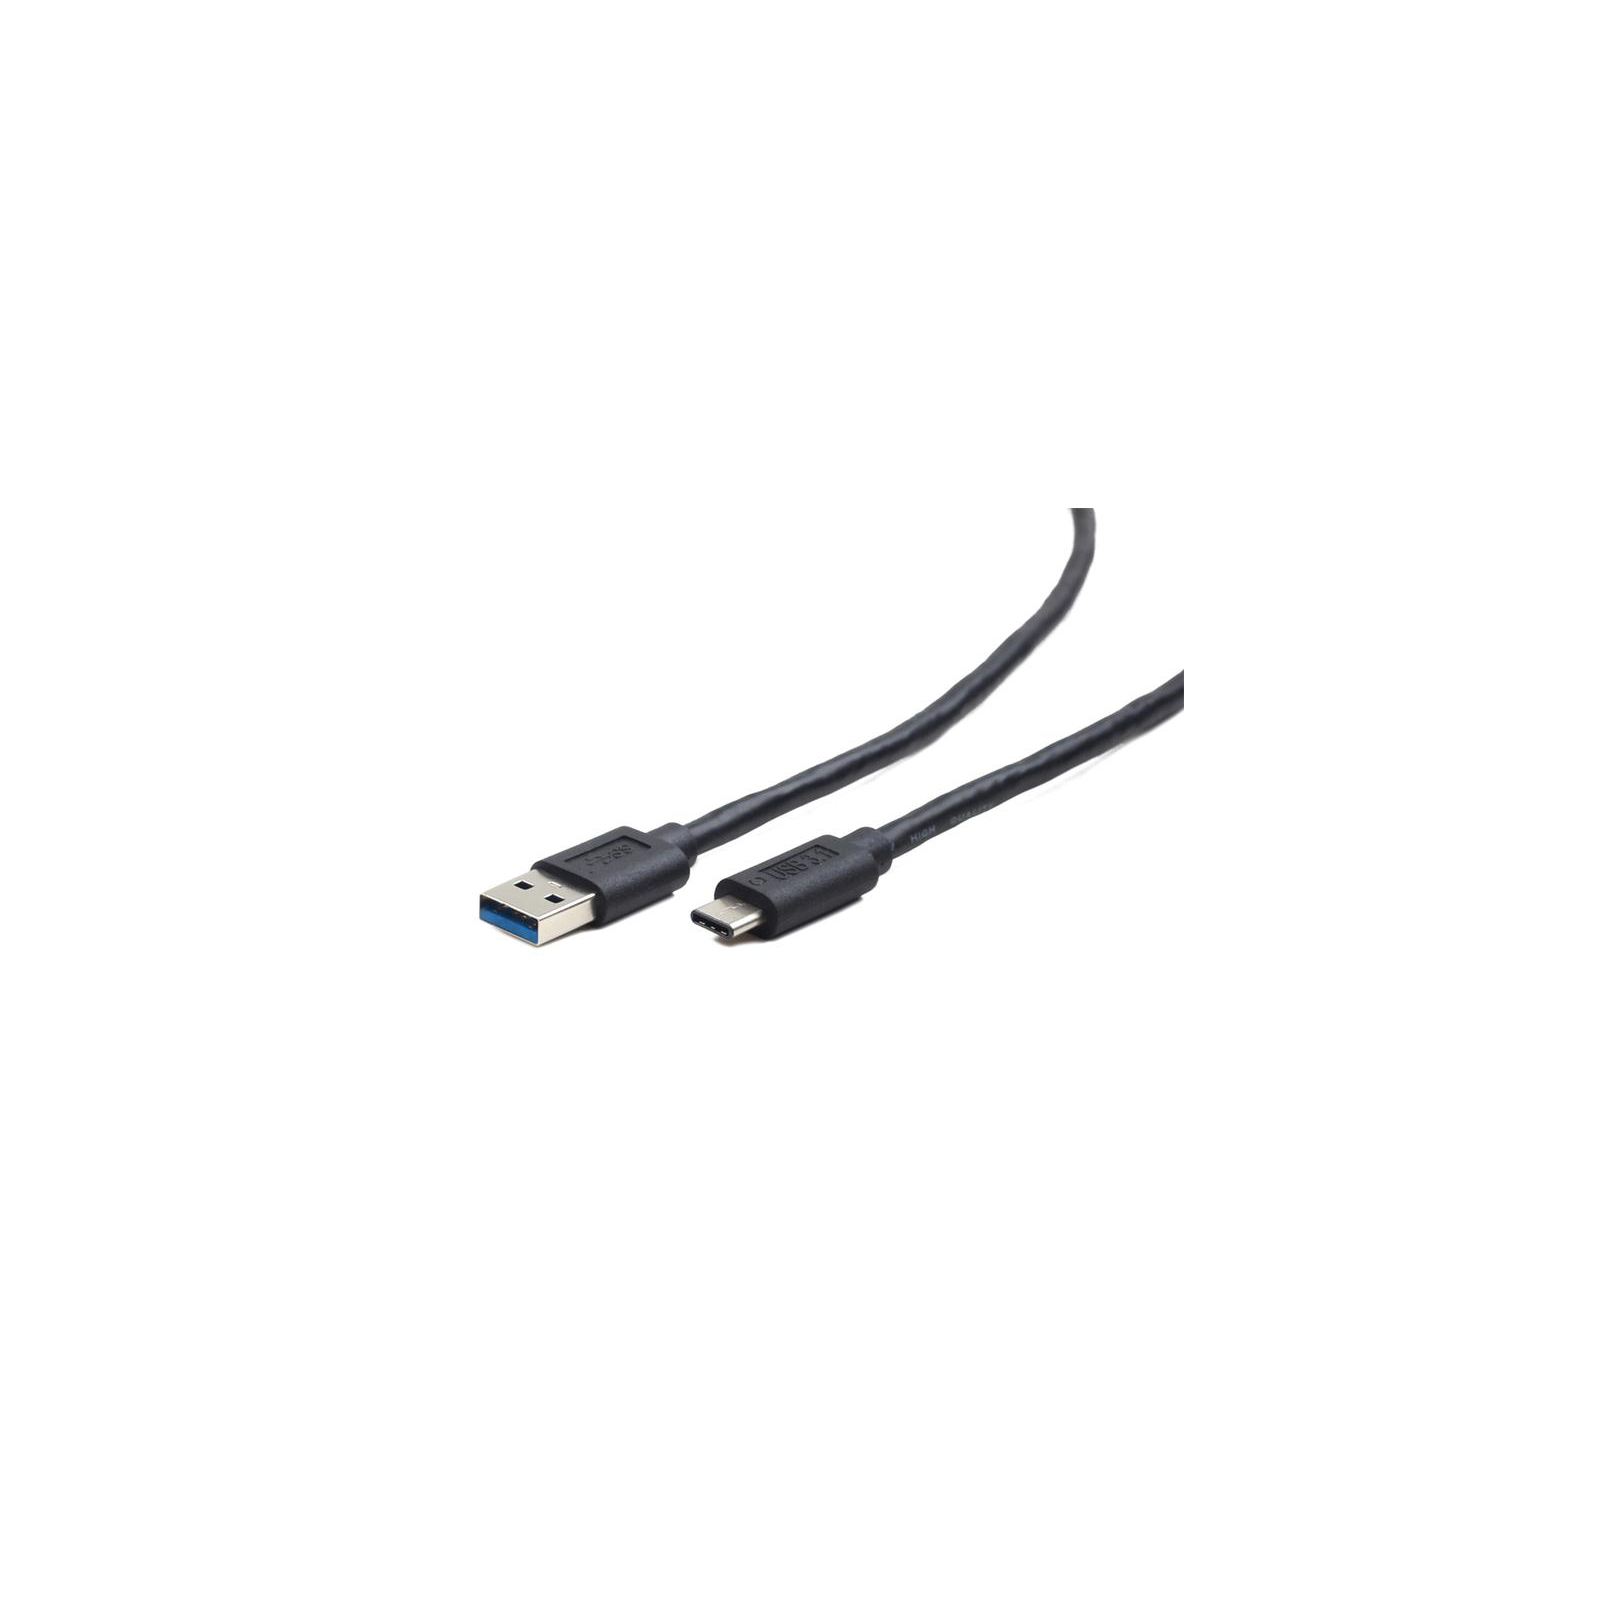 Дата кабель USB 3.0 to Type-C 1.5m 5Gbps Kingda (KDUSBC3002-1.5M)